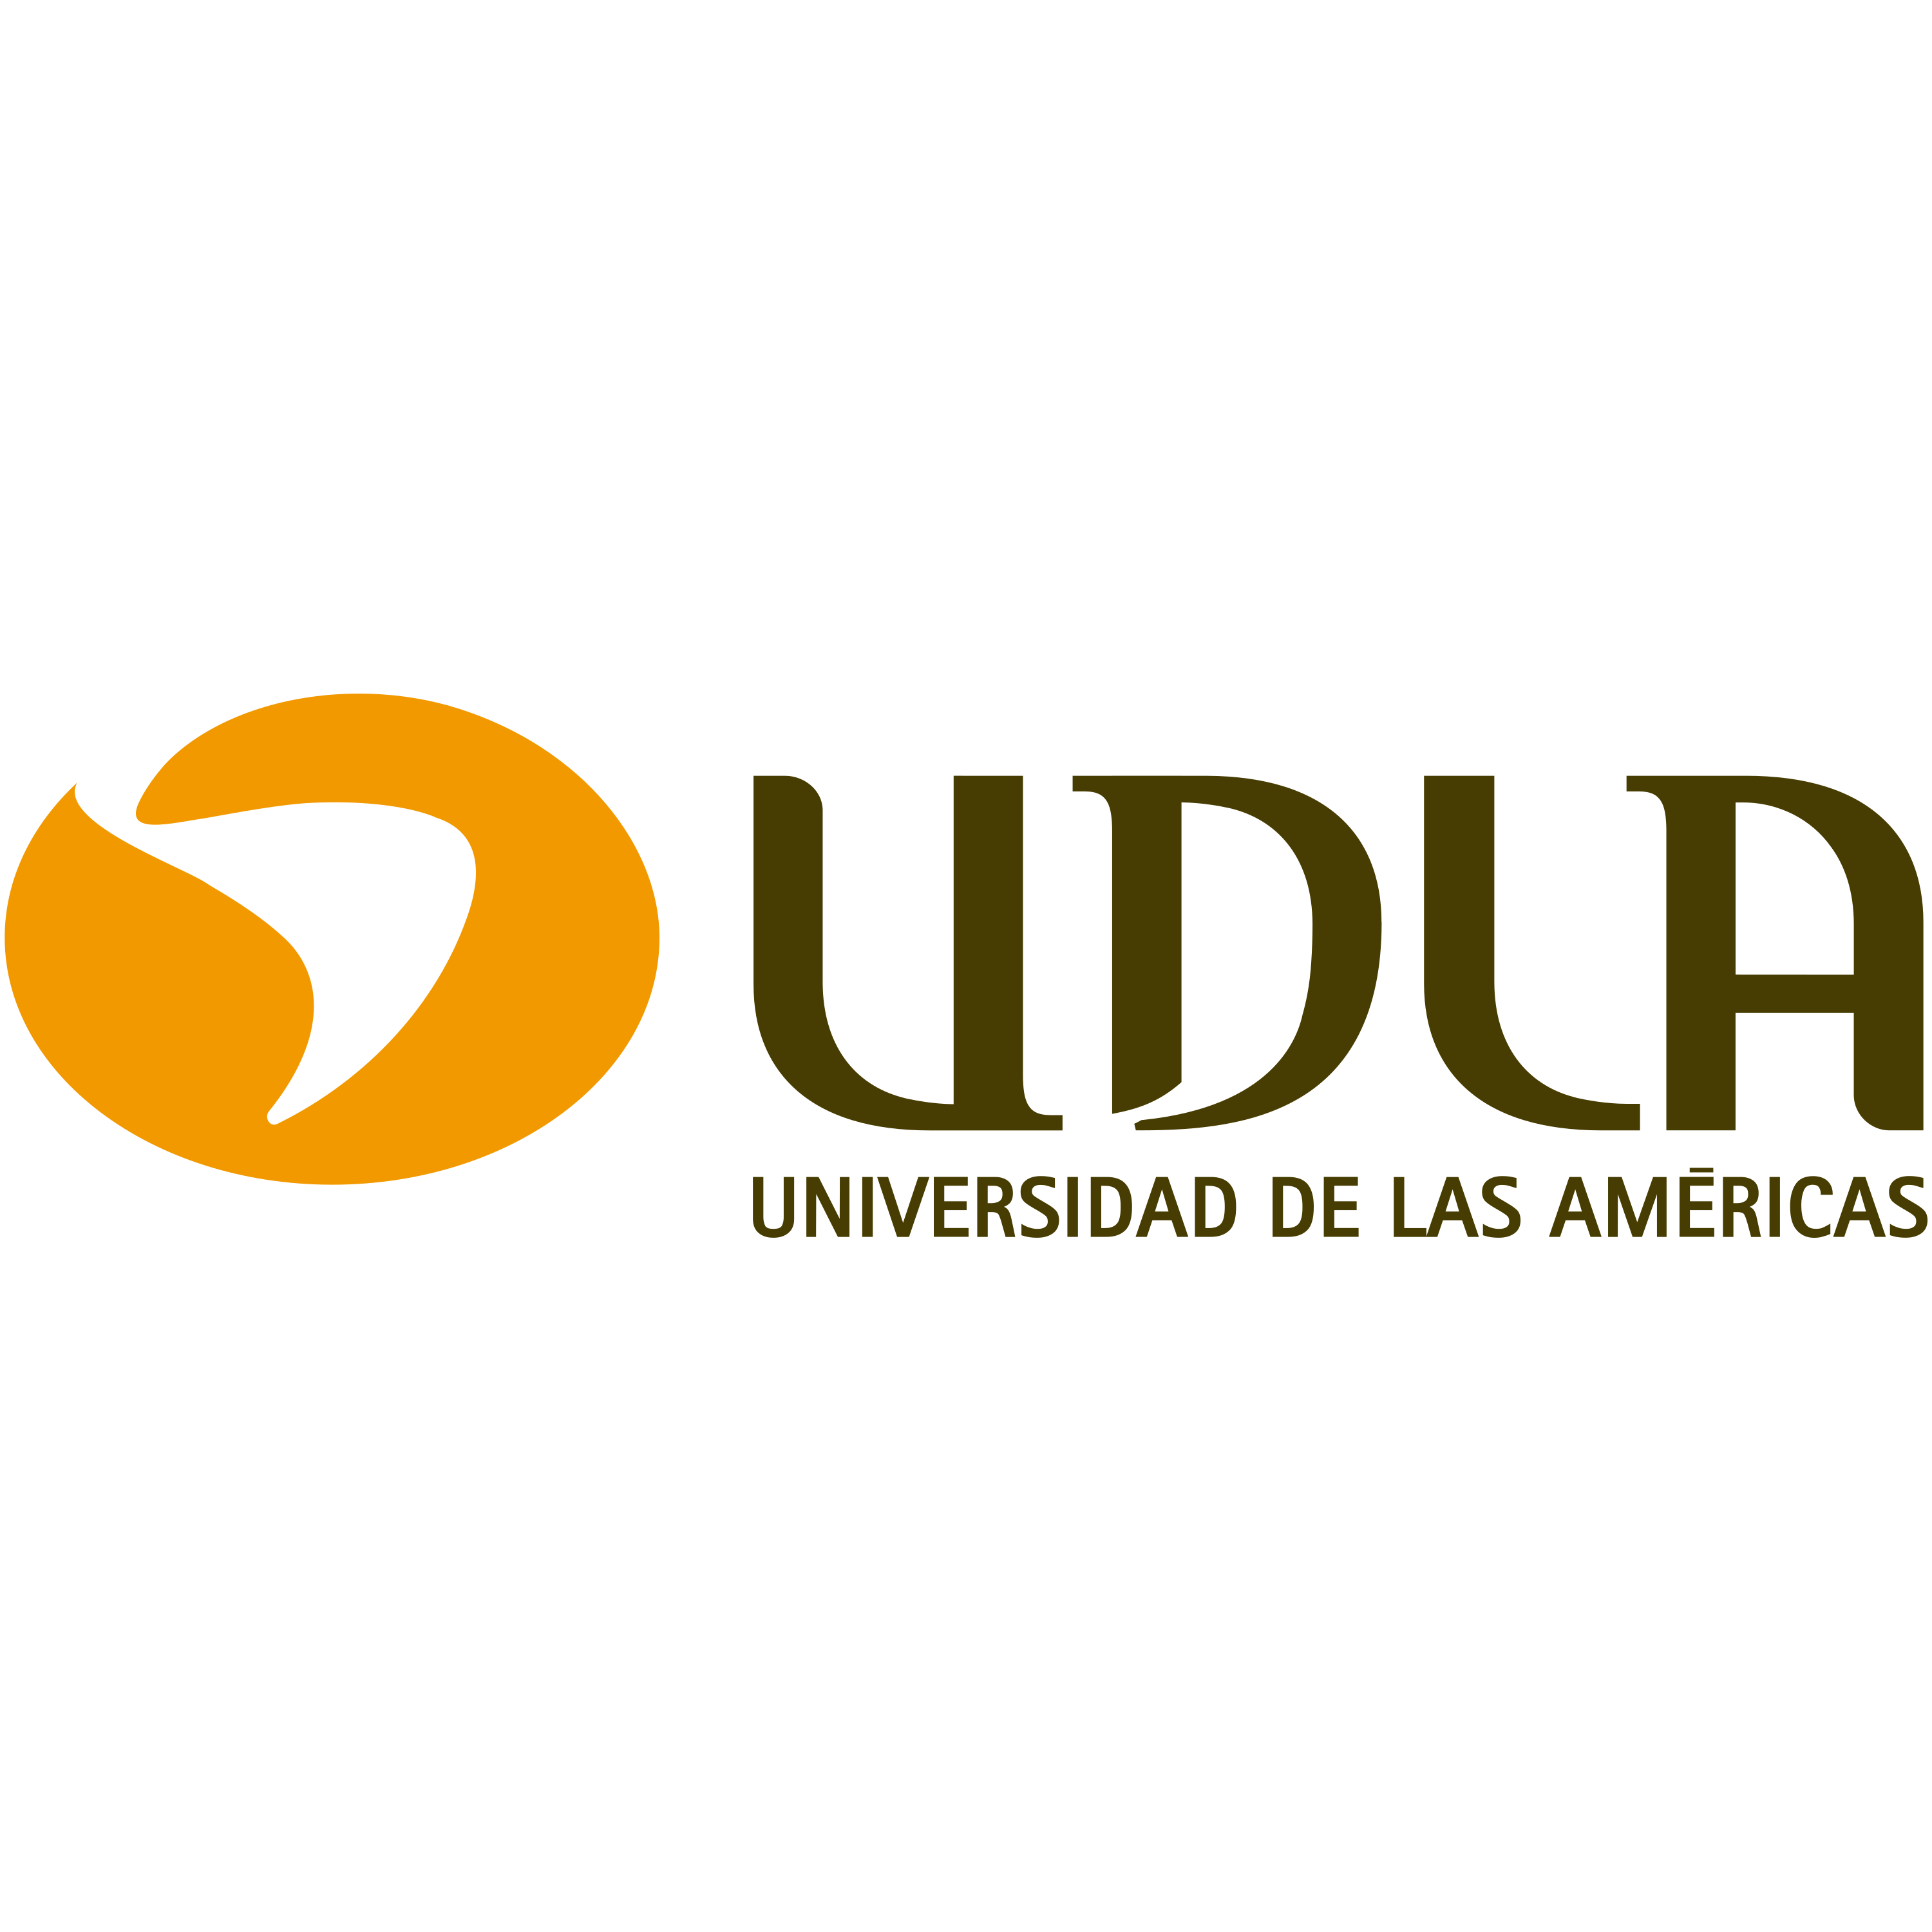 UDLA Logo Transparent Picture